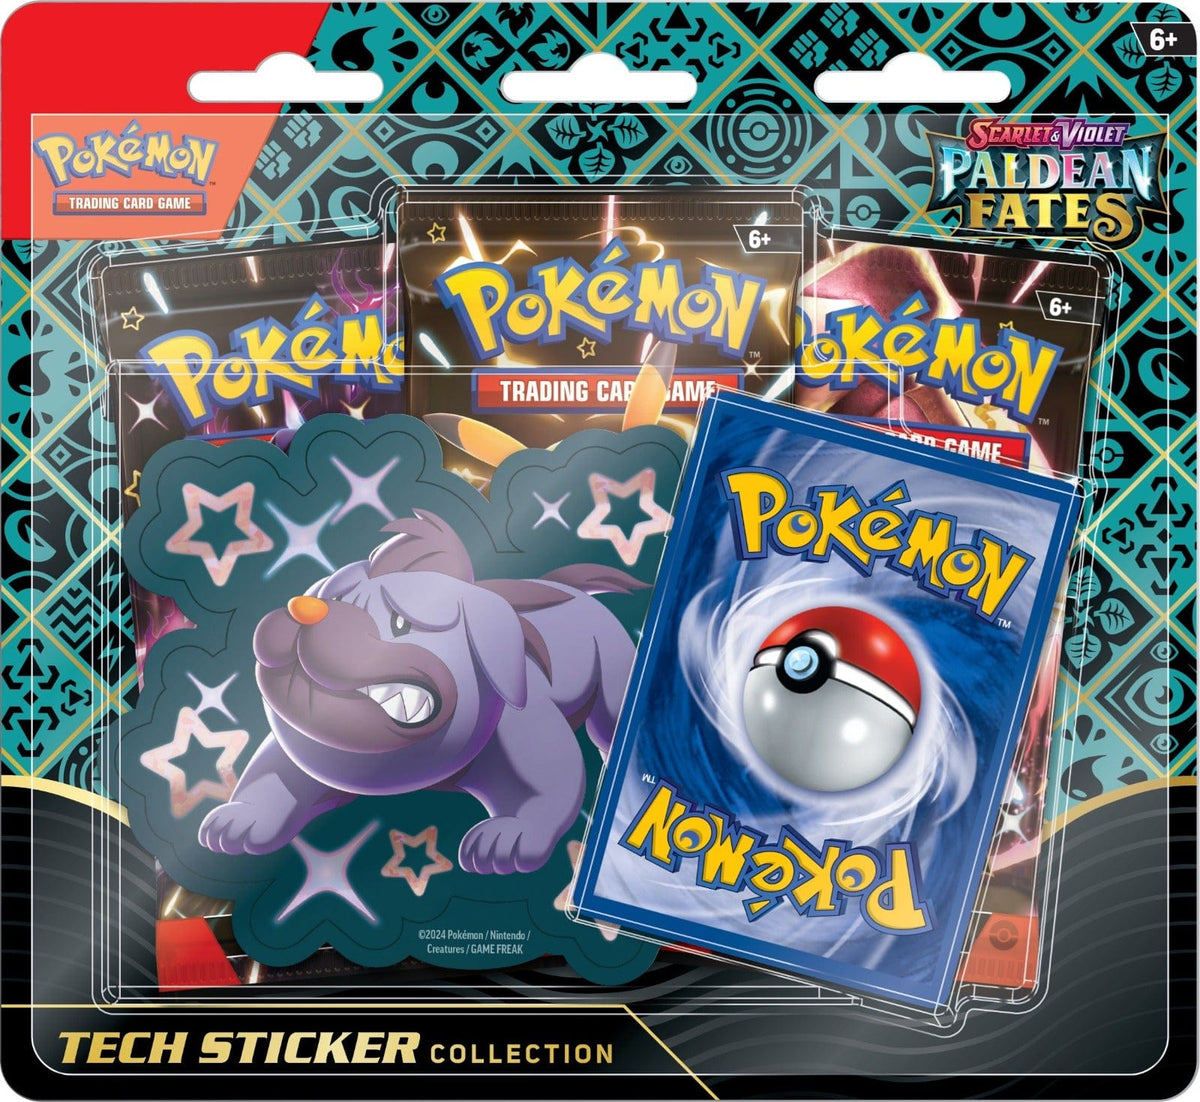 Pokémon TCG Paldean Fates - Tech Sticker Collection